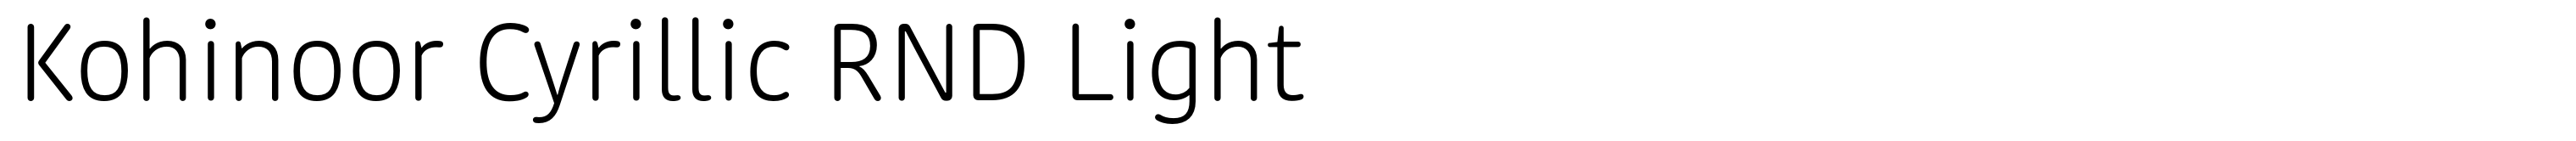 Kohinoor Cyrillic RND Light